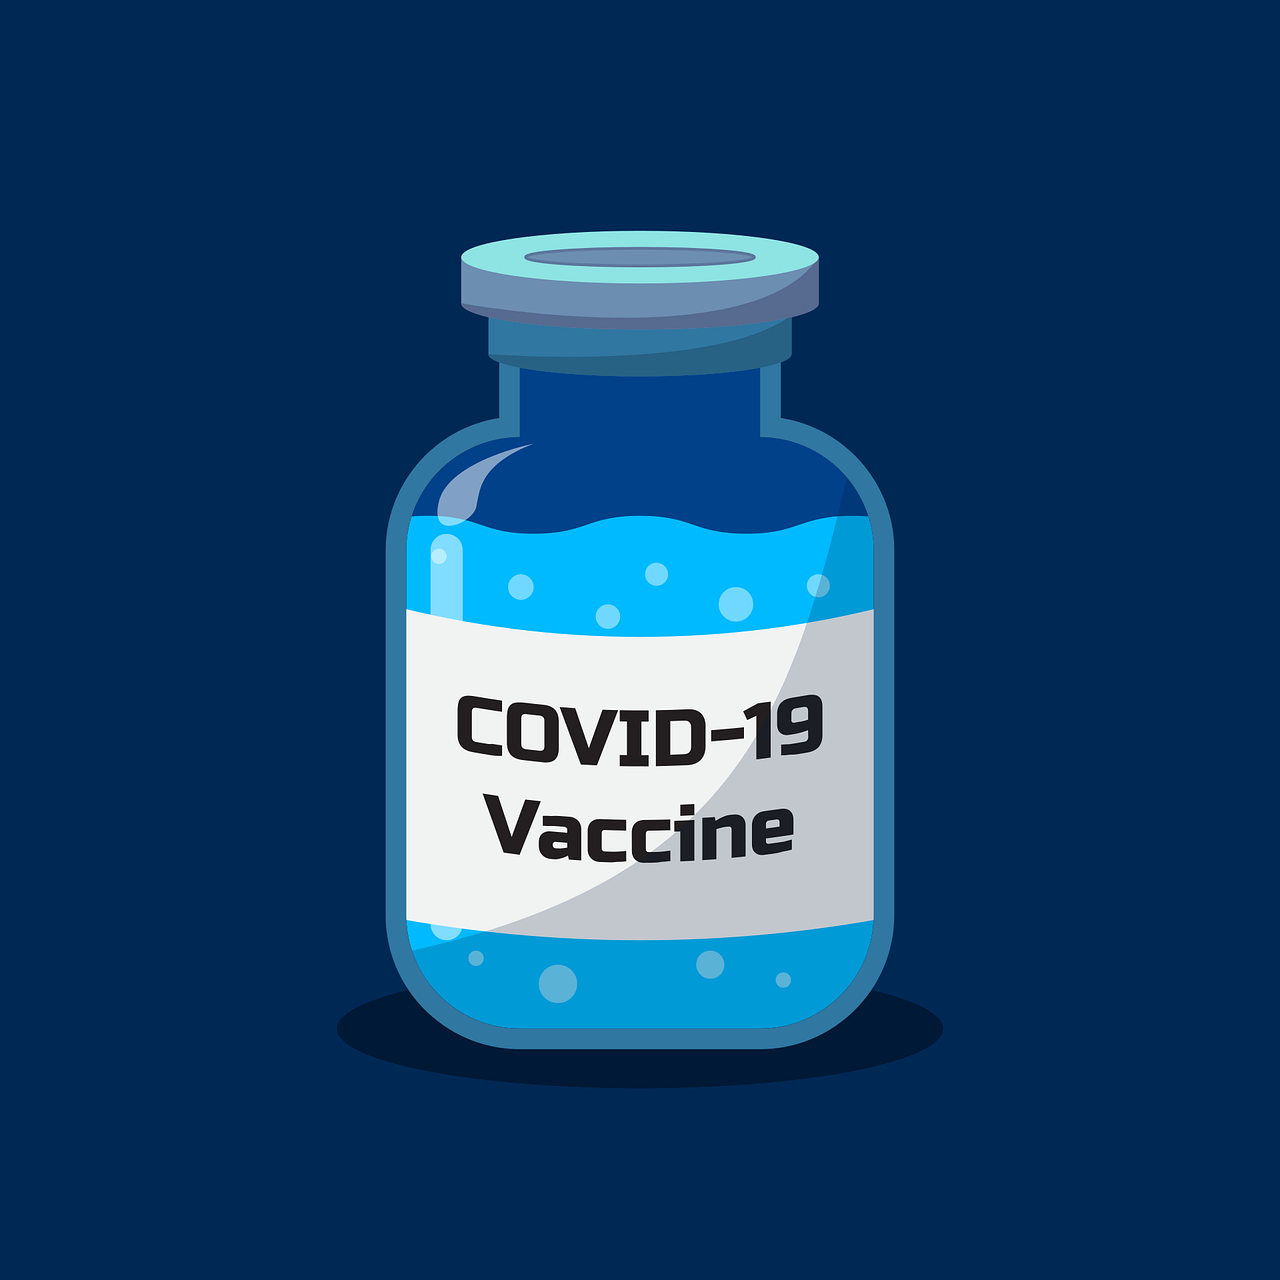 AKE Special Report: COVID-19 Vaccine